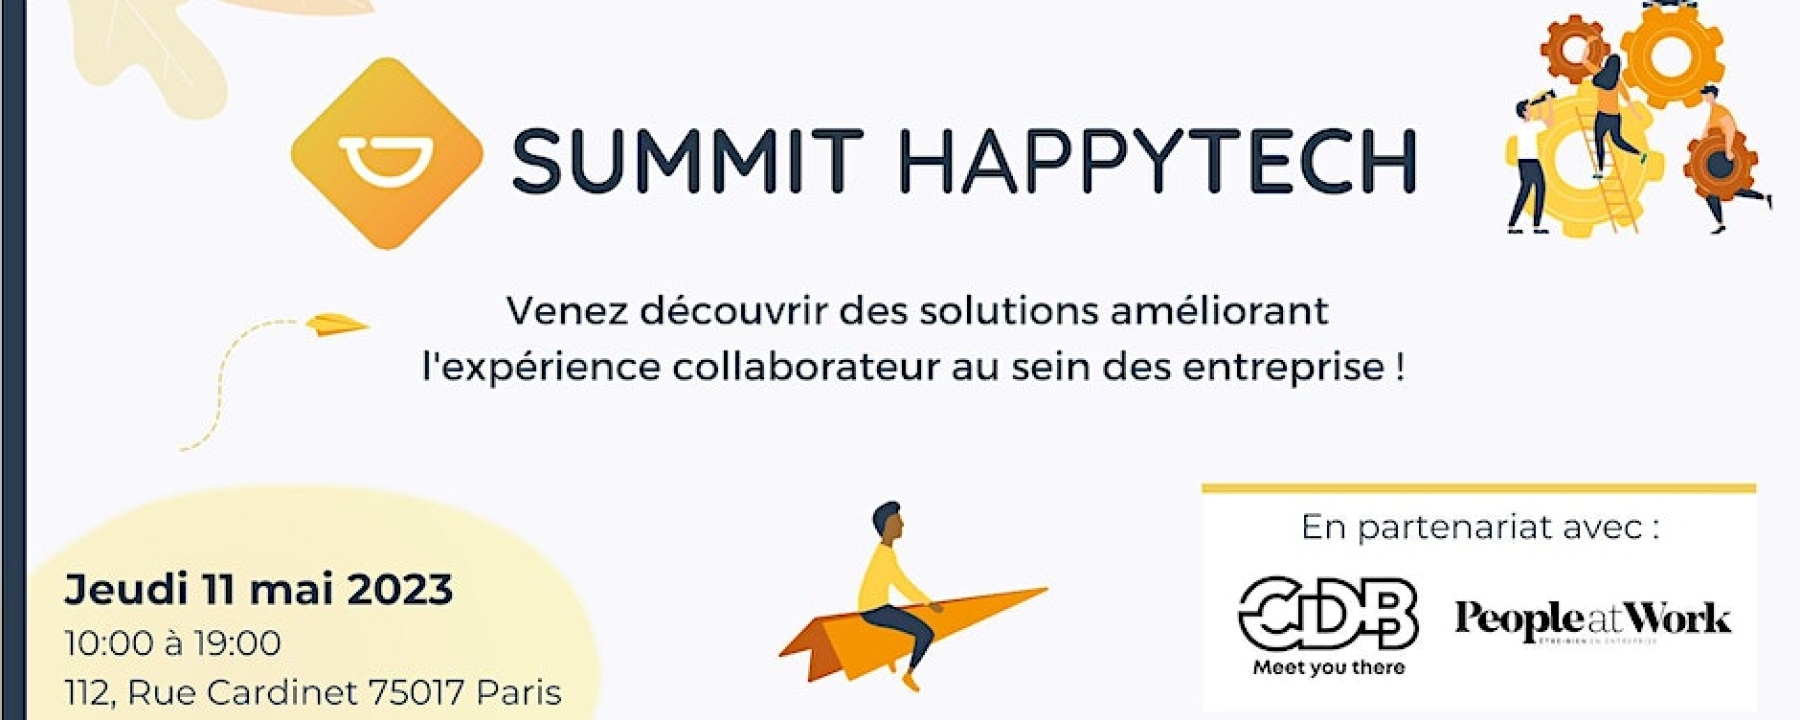 Summit happytech